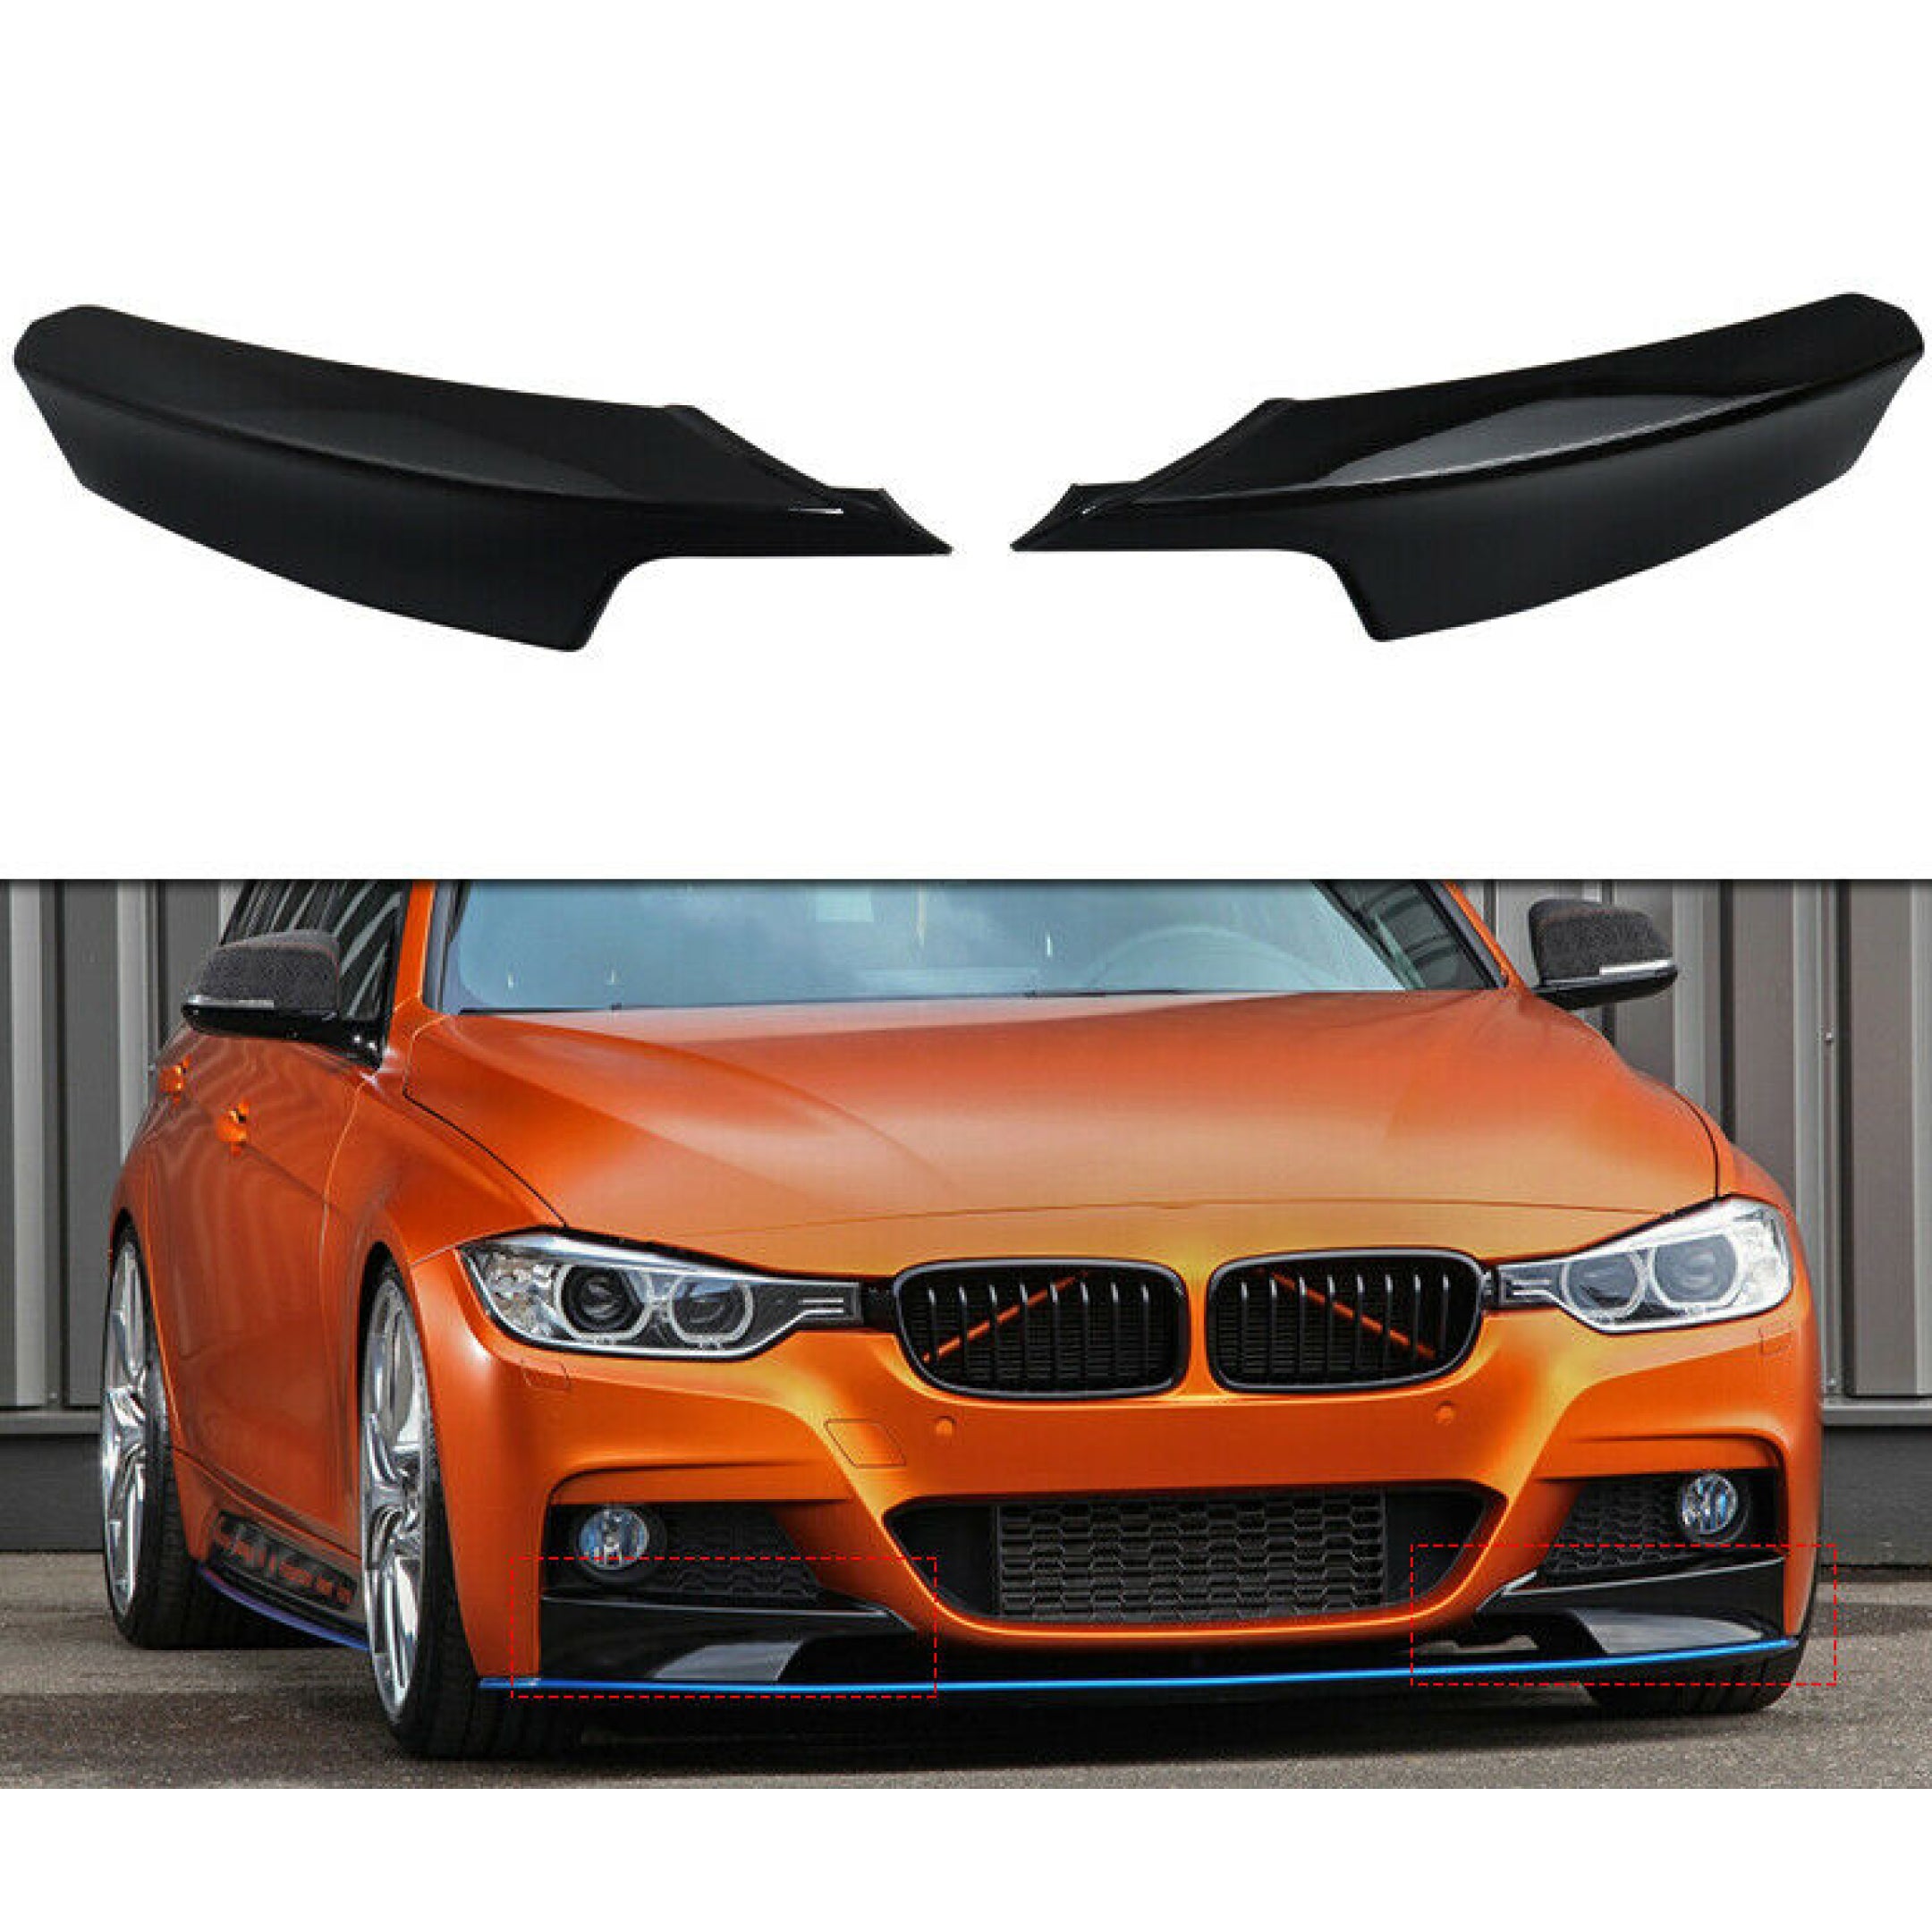 Compatible con divisores de esquina de labios de parachoques delantero BMW 3 Series F30 M Sport 2012-2018 (negro brillante)